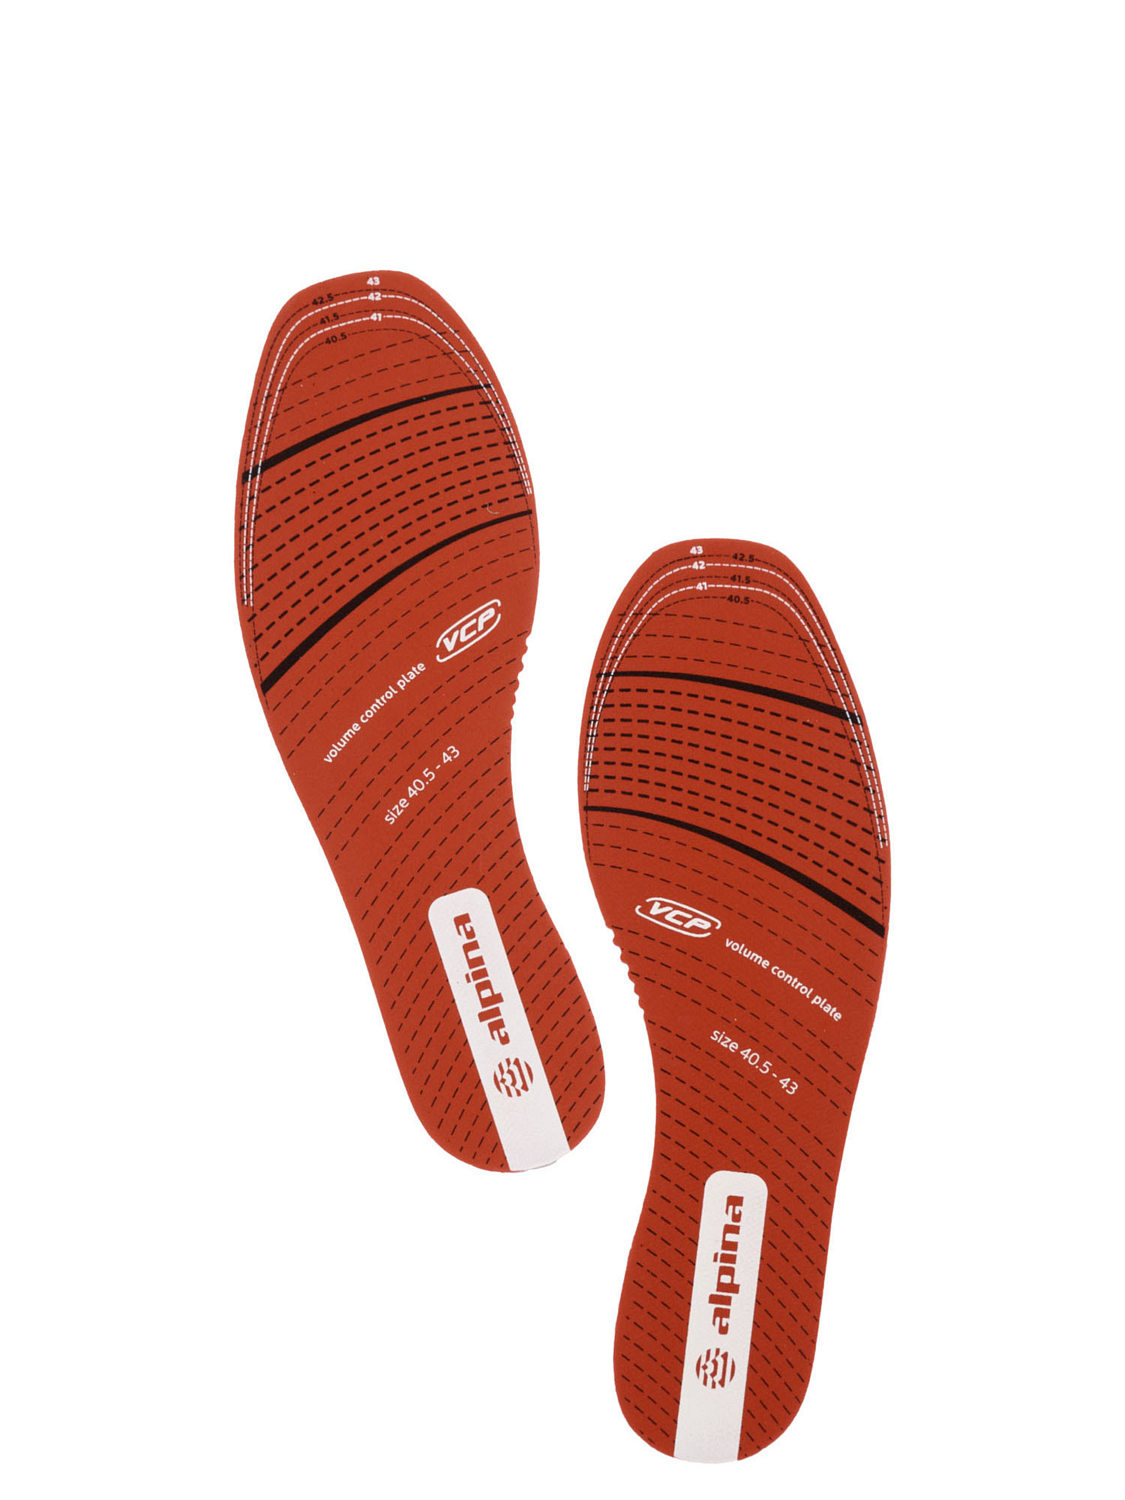 Лыжные ботинки Alpina. PRO CL DPP Red/White/Black